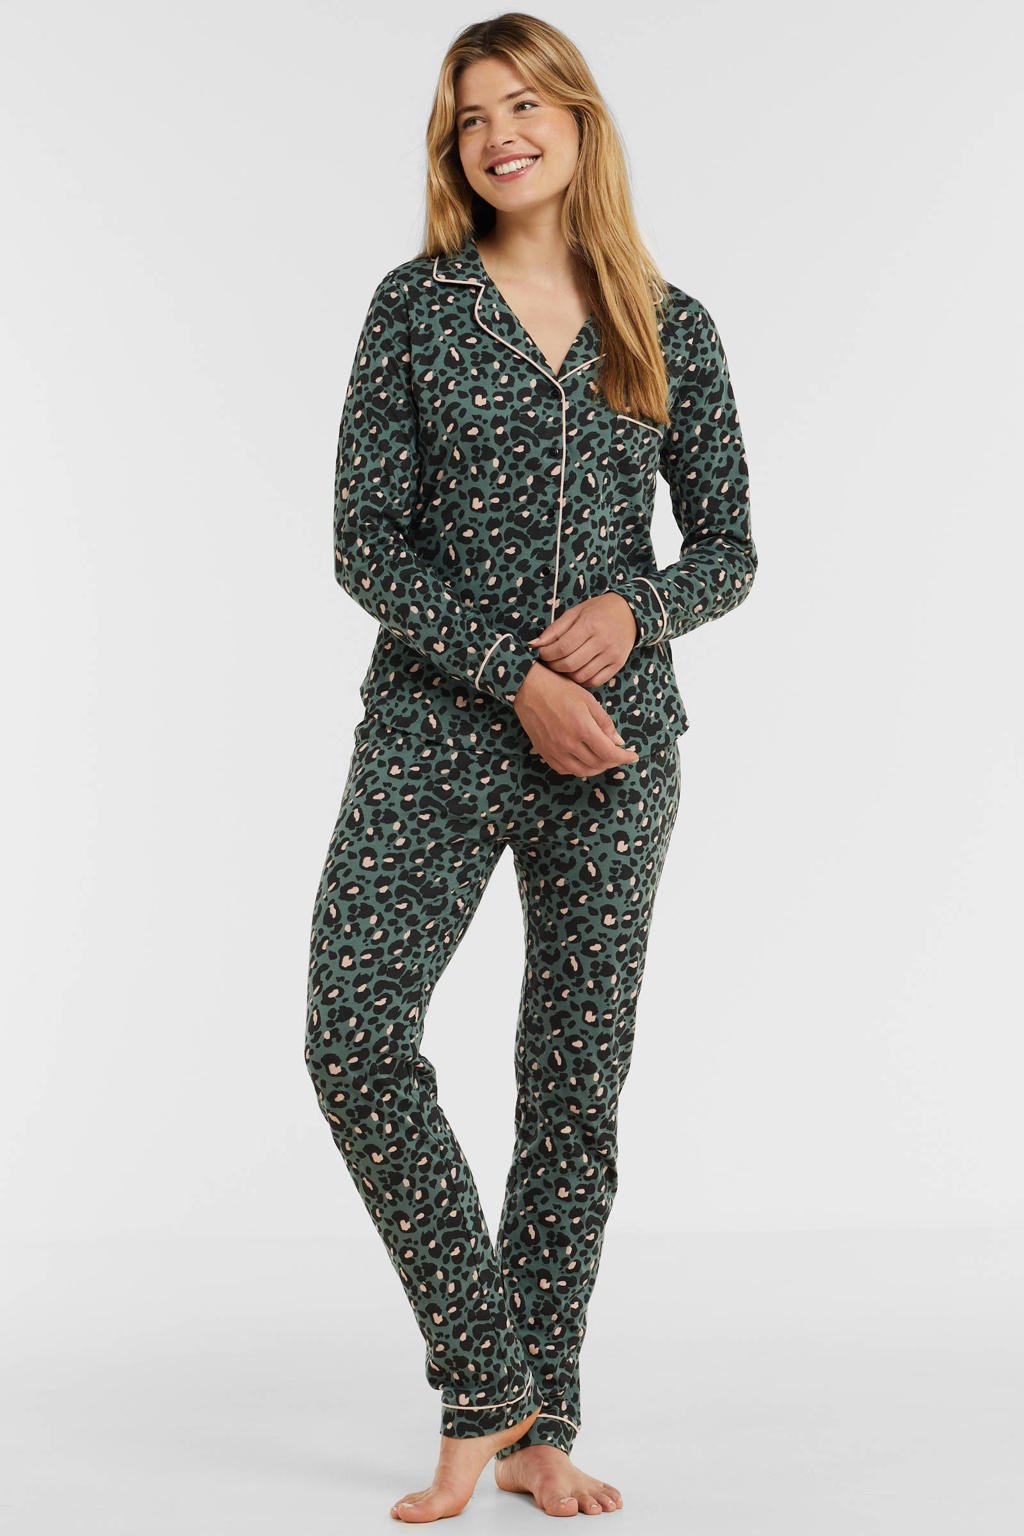 Dreamcovers pyjama met panterprint groen/zwart